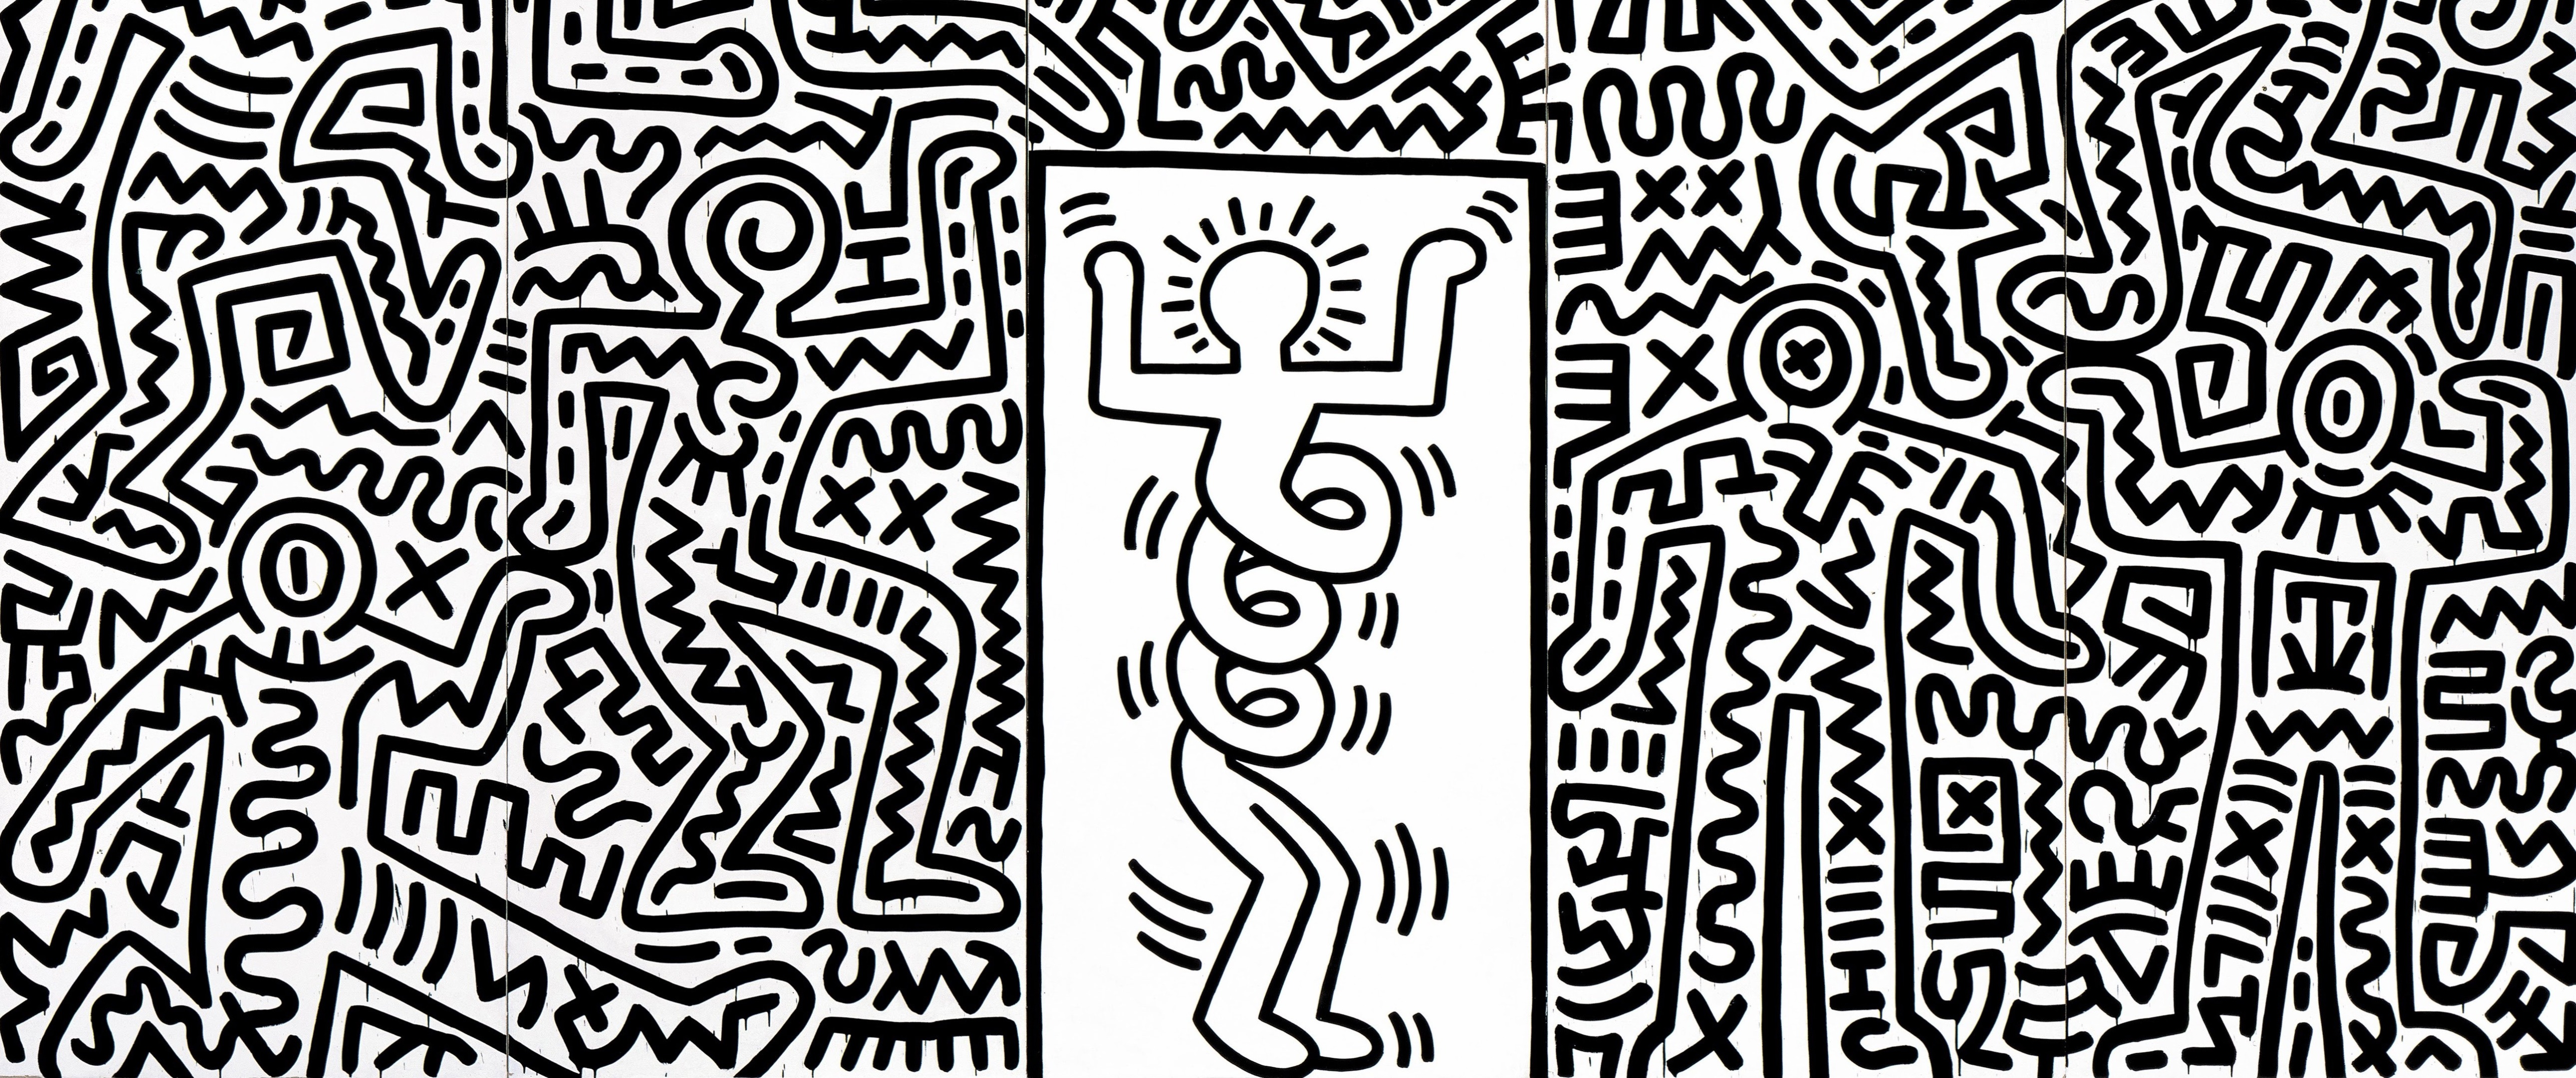 General 5160x2160 Keith Haring acrylic pop art cotton fabric drawing digital art